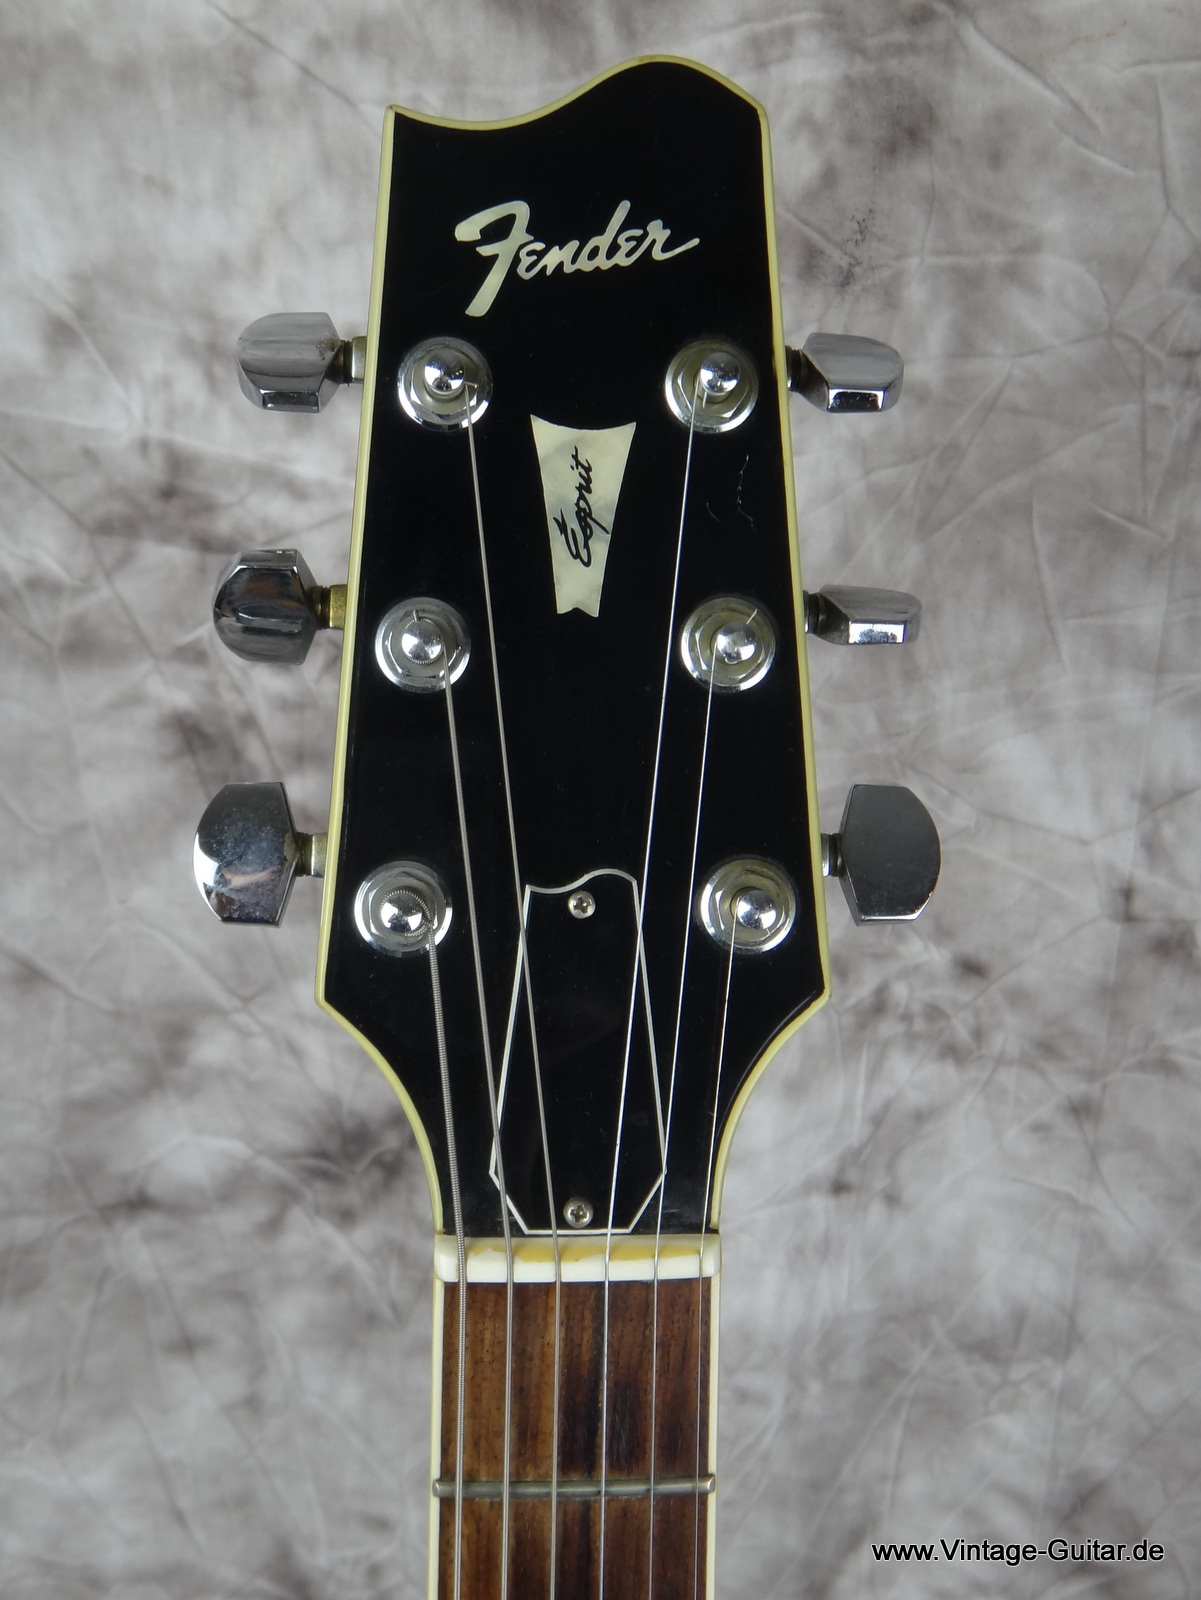 Fender-Esprit-Standard-1985-005.JPG